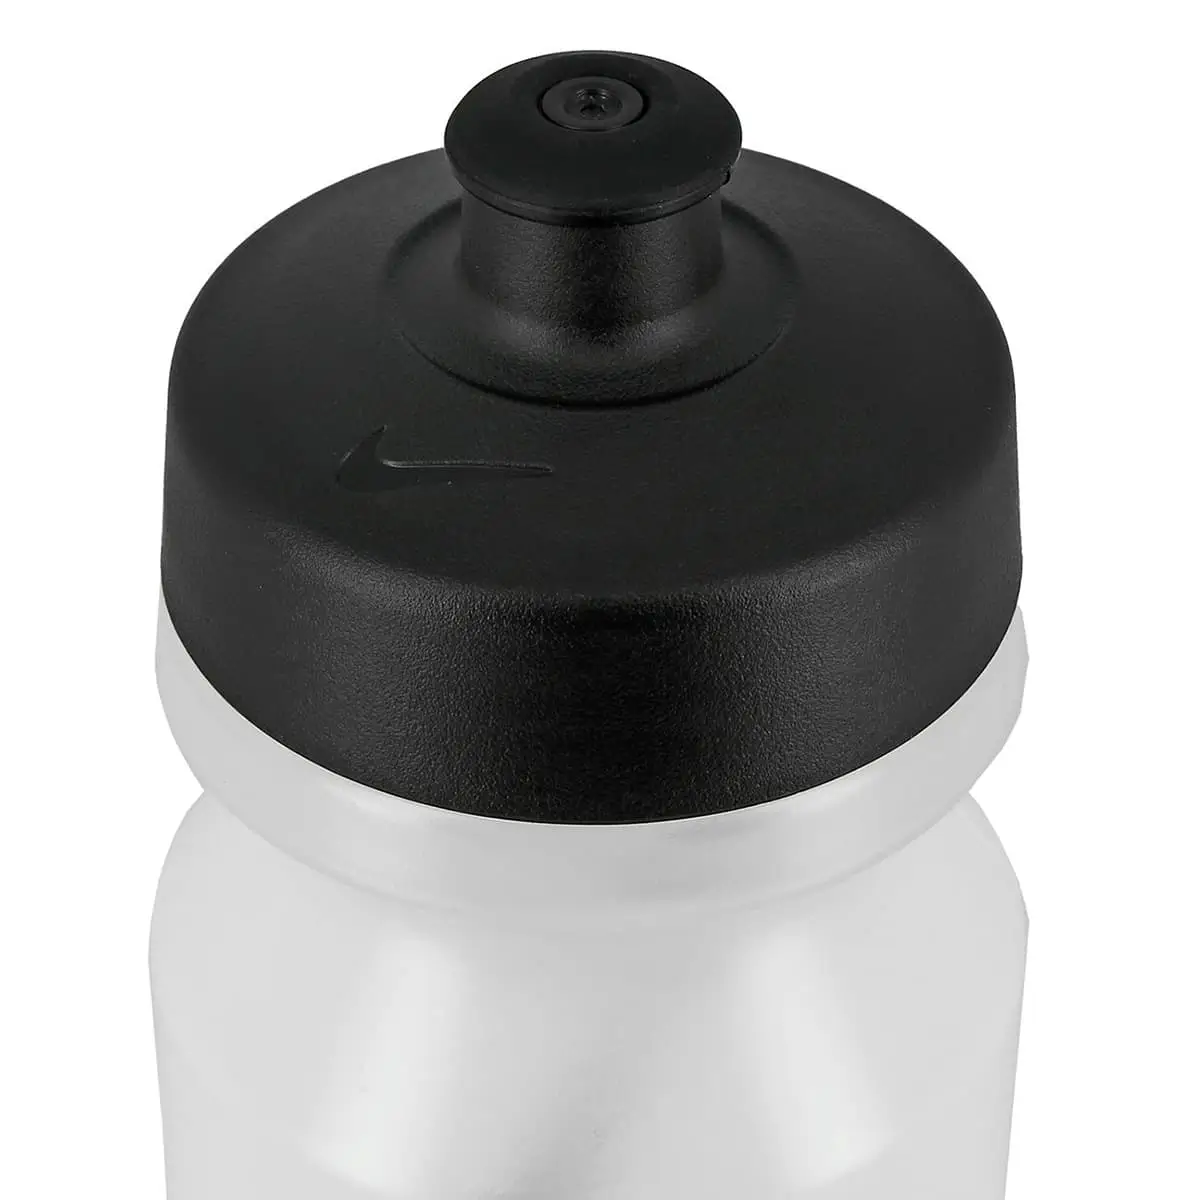 Nike Bıg Mouth Bottle 2.0 22 Oz Beyaz Unisex Suluk - N.000.0042.968.22